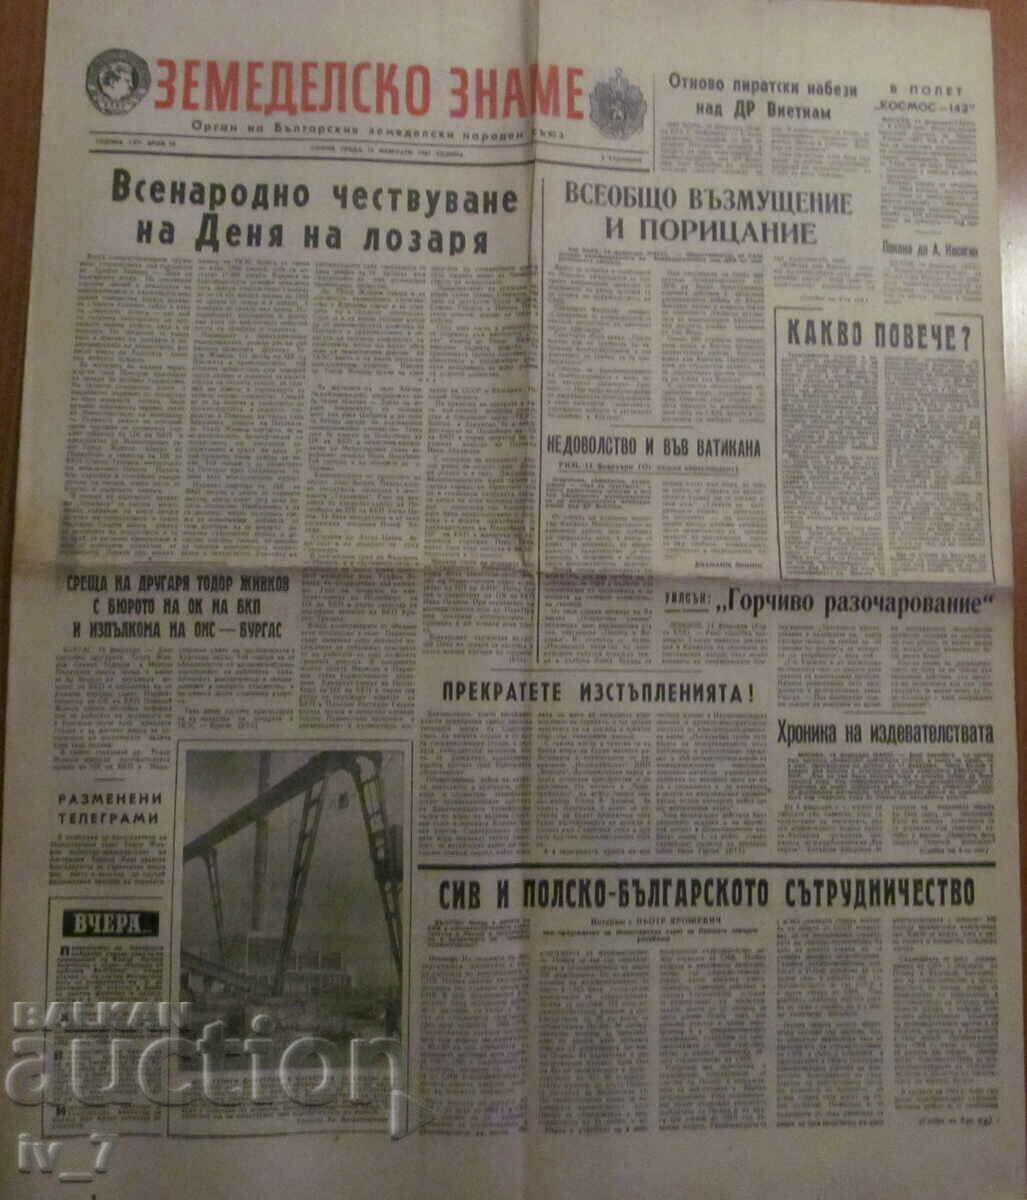 Newspaper "AGRICULTURAL FLAG" - February 15, 1967